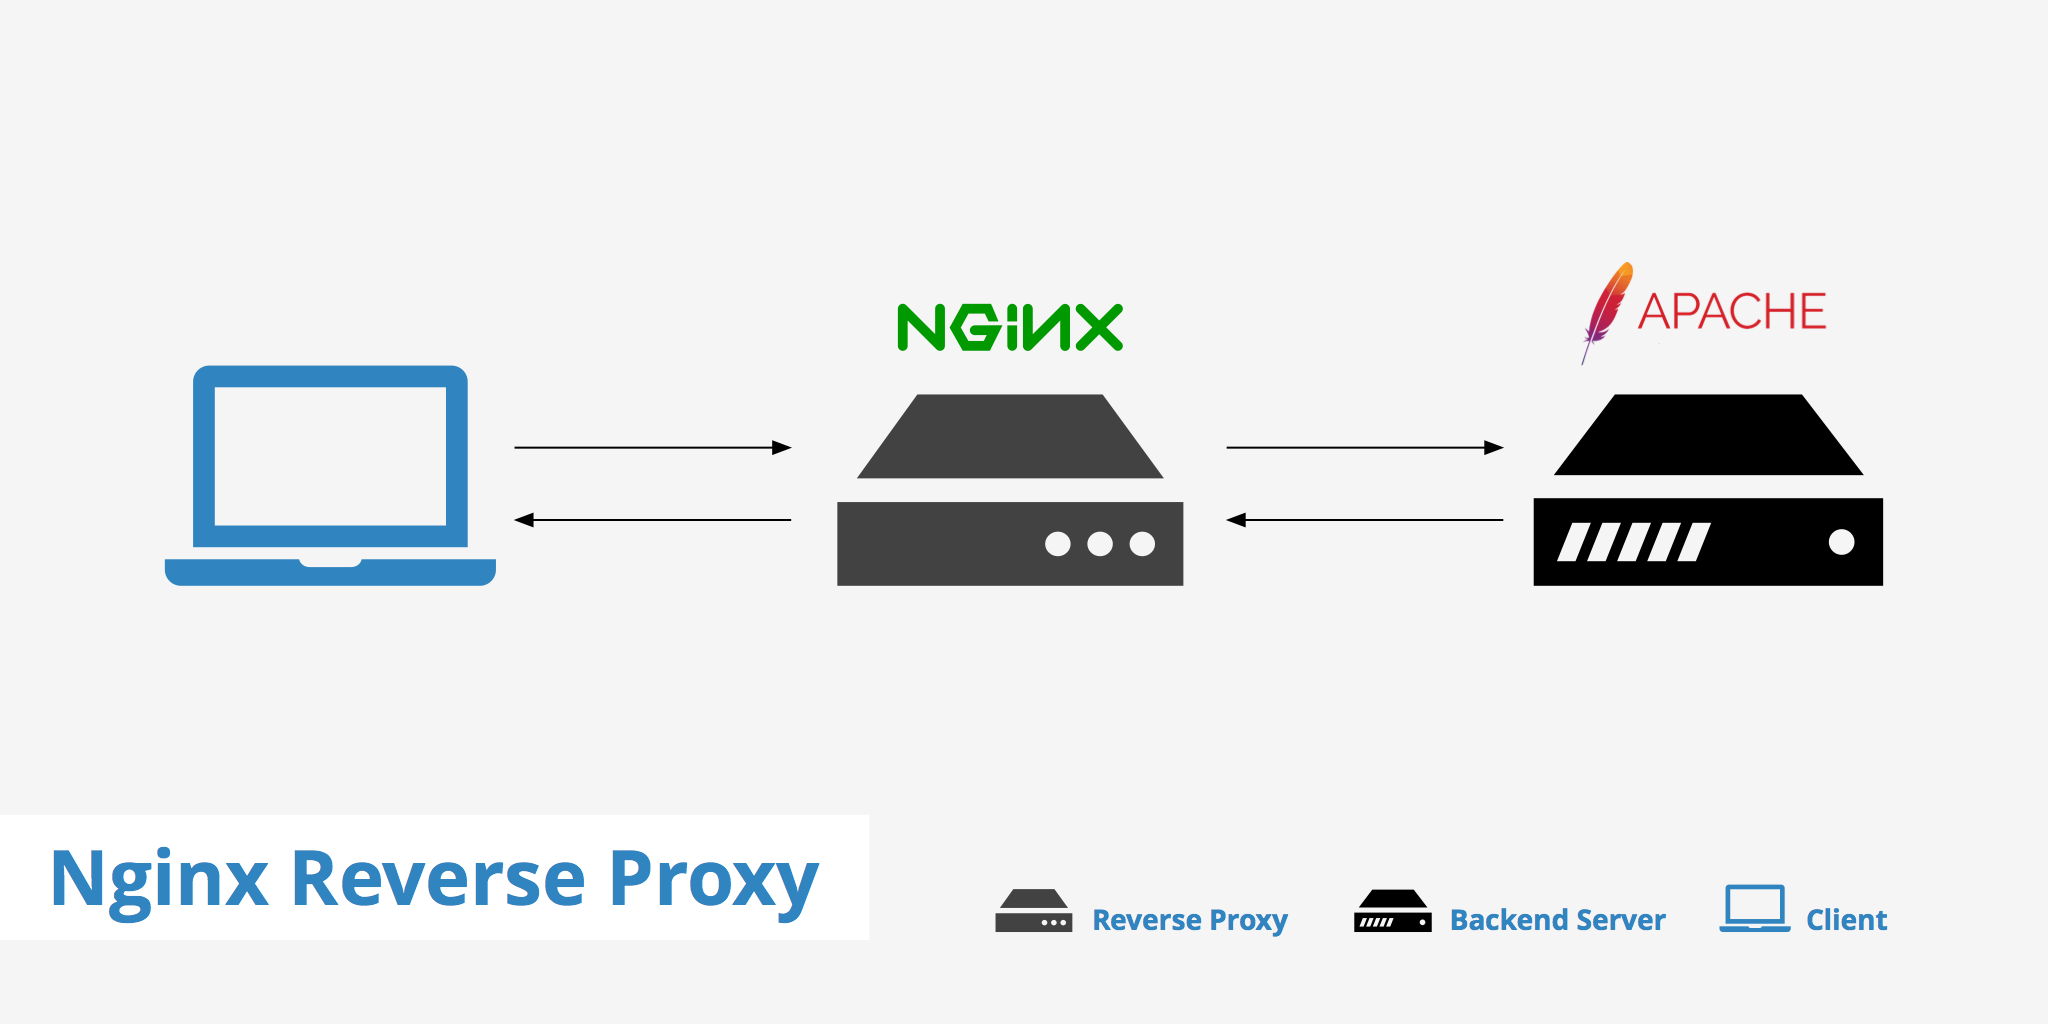 Setting up an Nginx Reverse Proxy